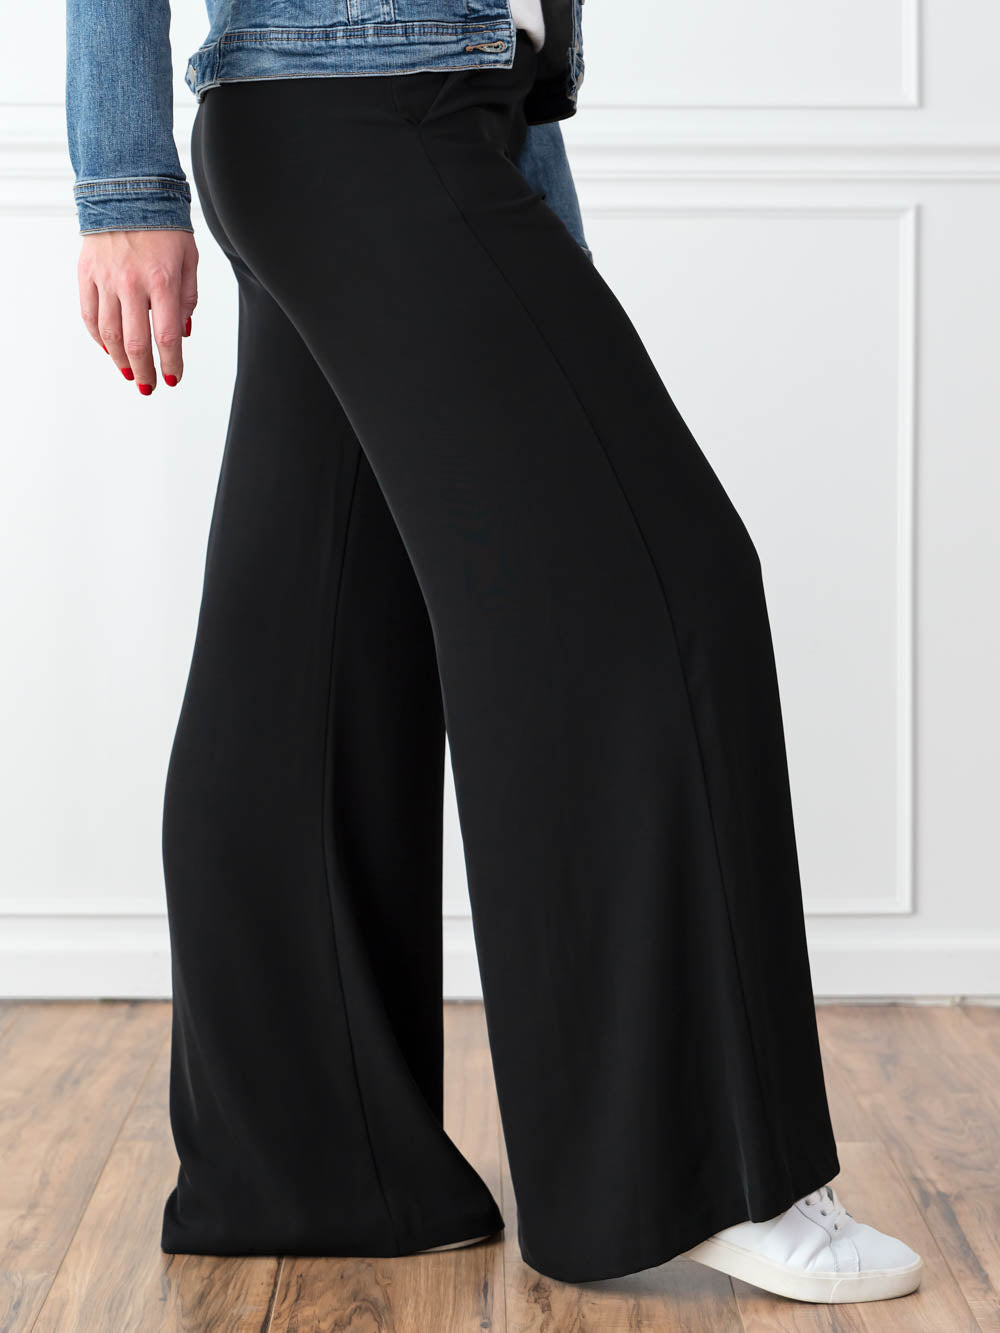 Black Wide Leg Dressy Pants for Tall Girls